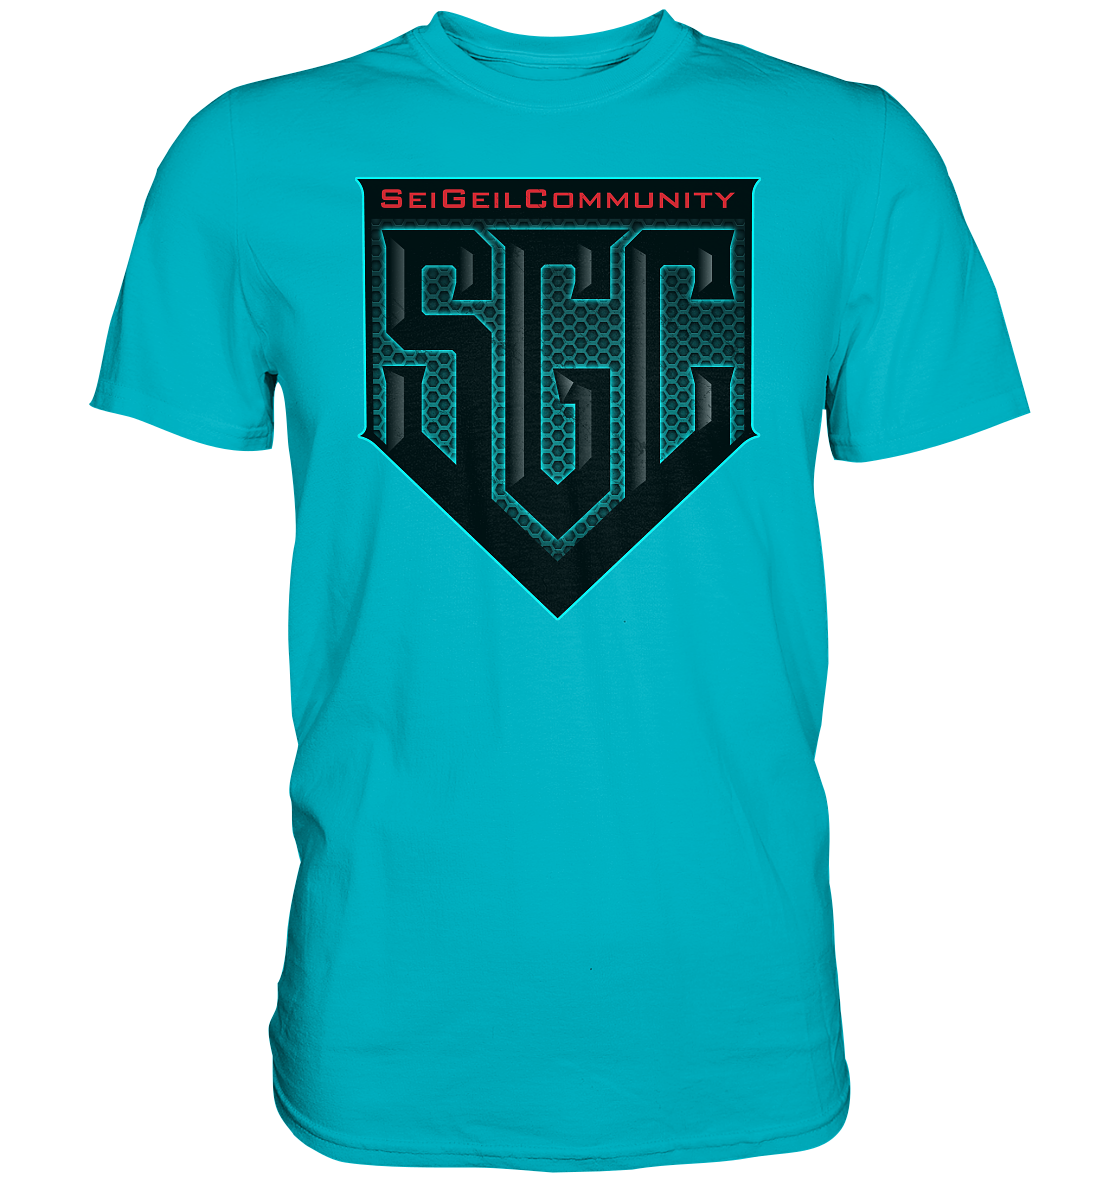 SEI GEIL COMMUNITY - Basic Shirt